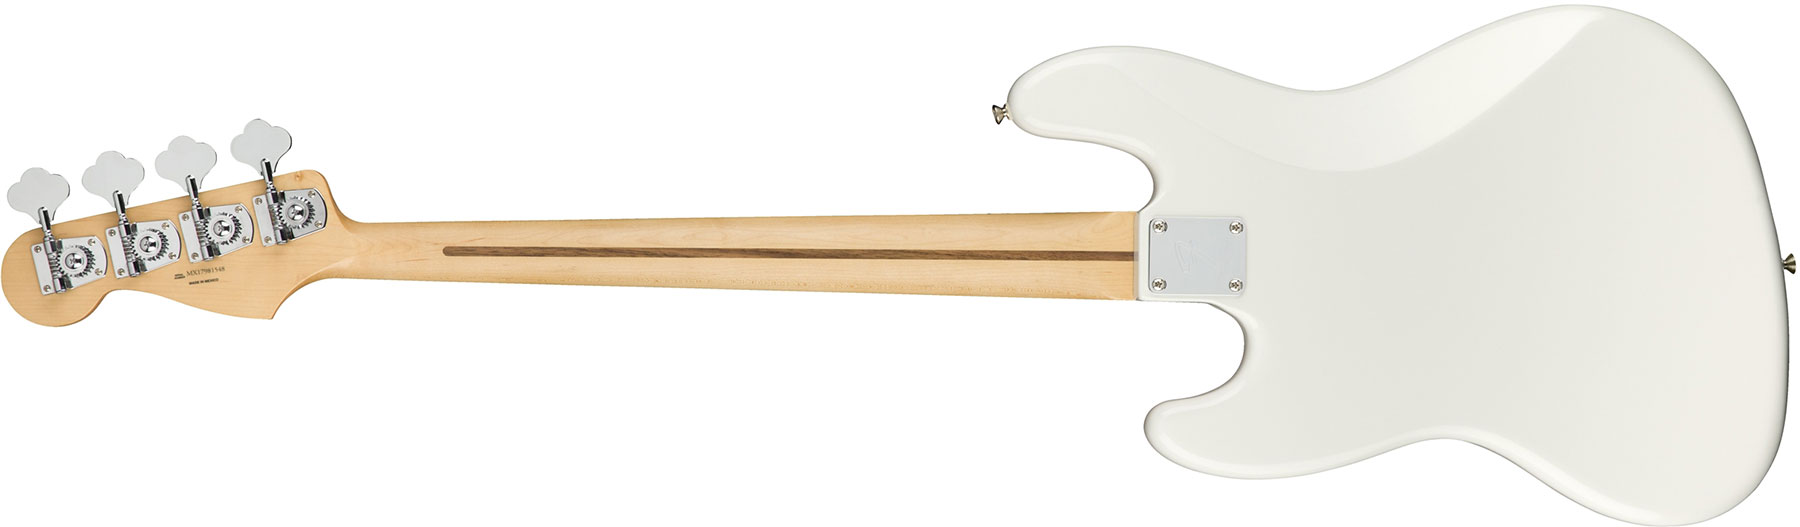 Fender Jazz Bass Player Mex Mn - Polar White - Basse Électrique Solid Body - Variation 1